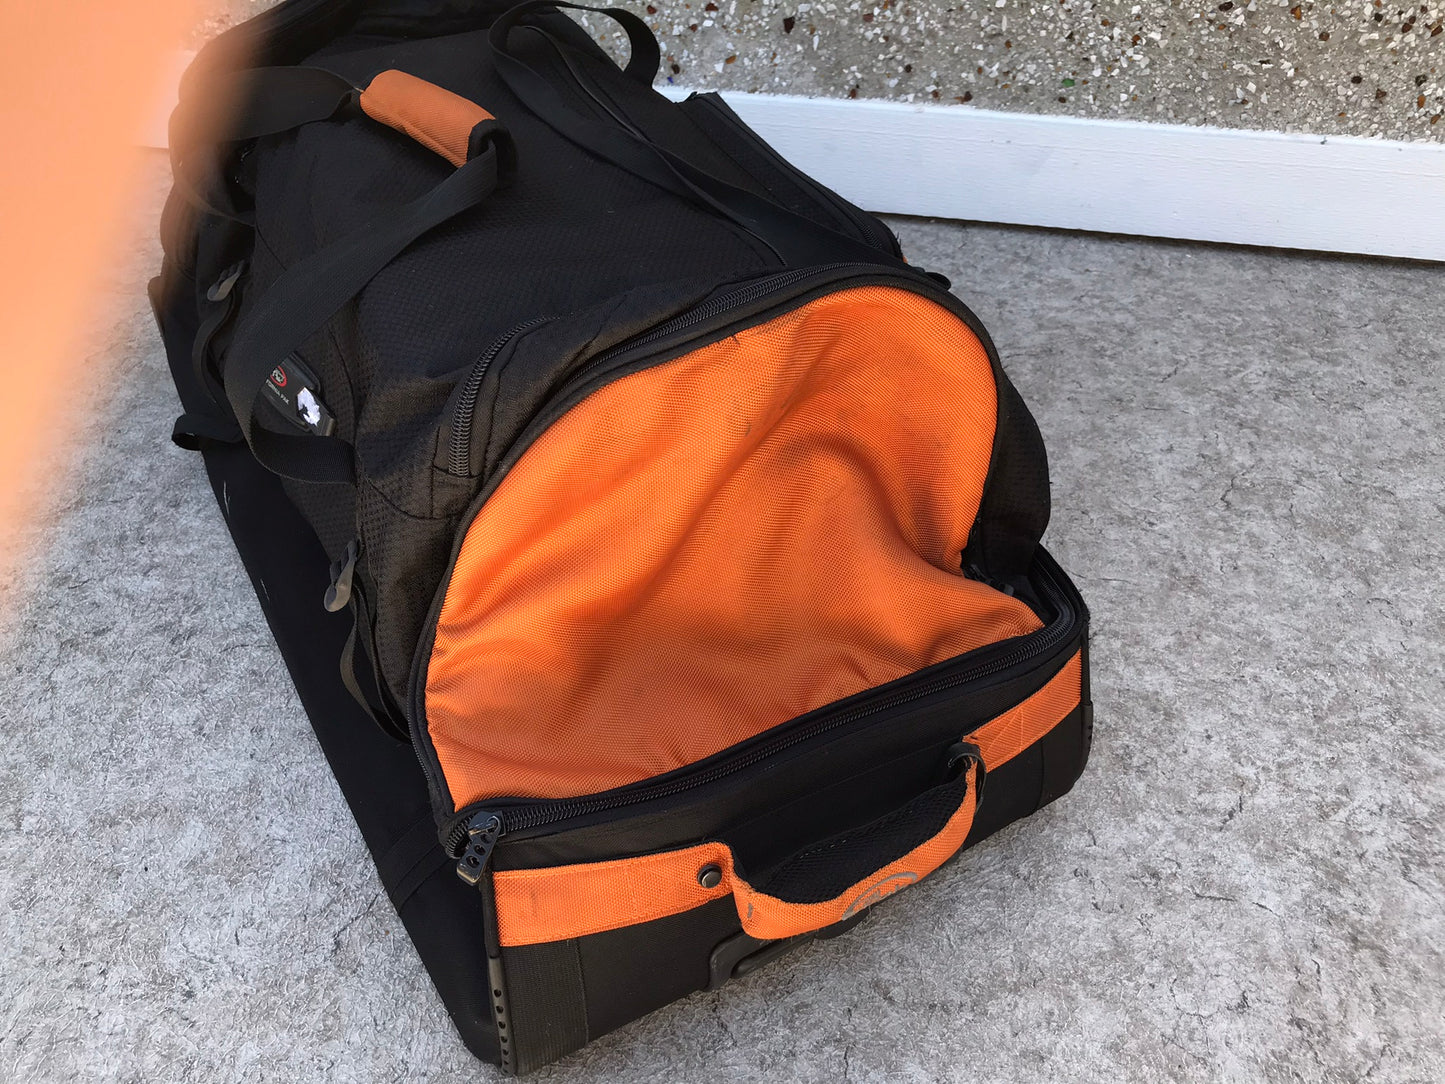 Hockey Bag DufflevTravel Large Sports Bag California Pack Black Tangerine On Wheels Minor Wear